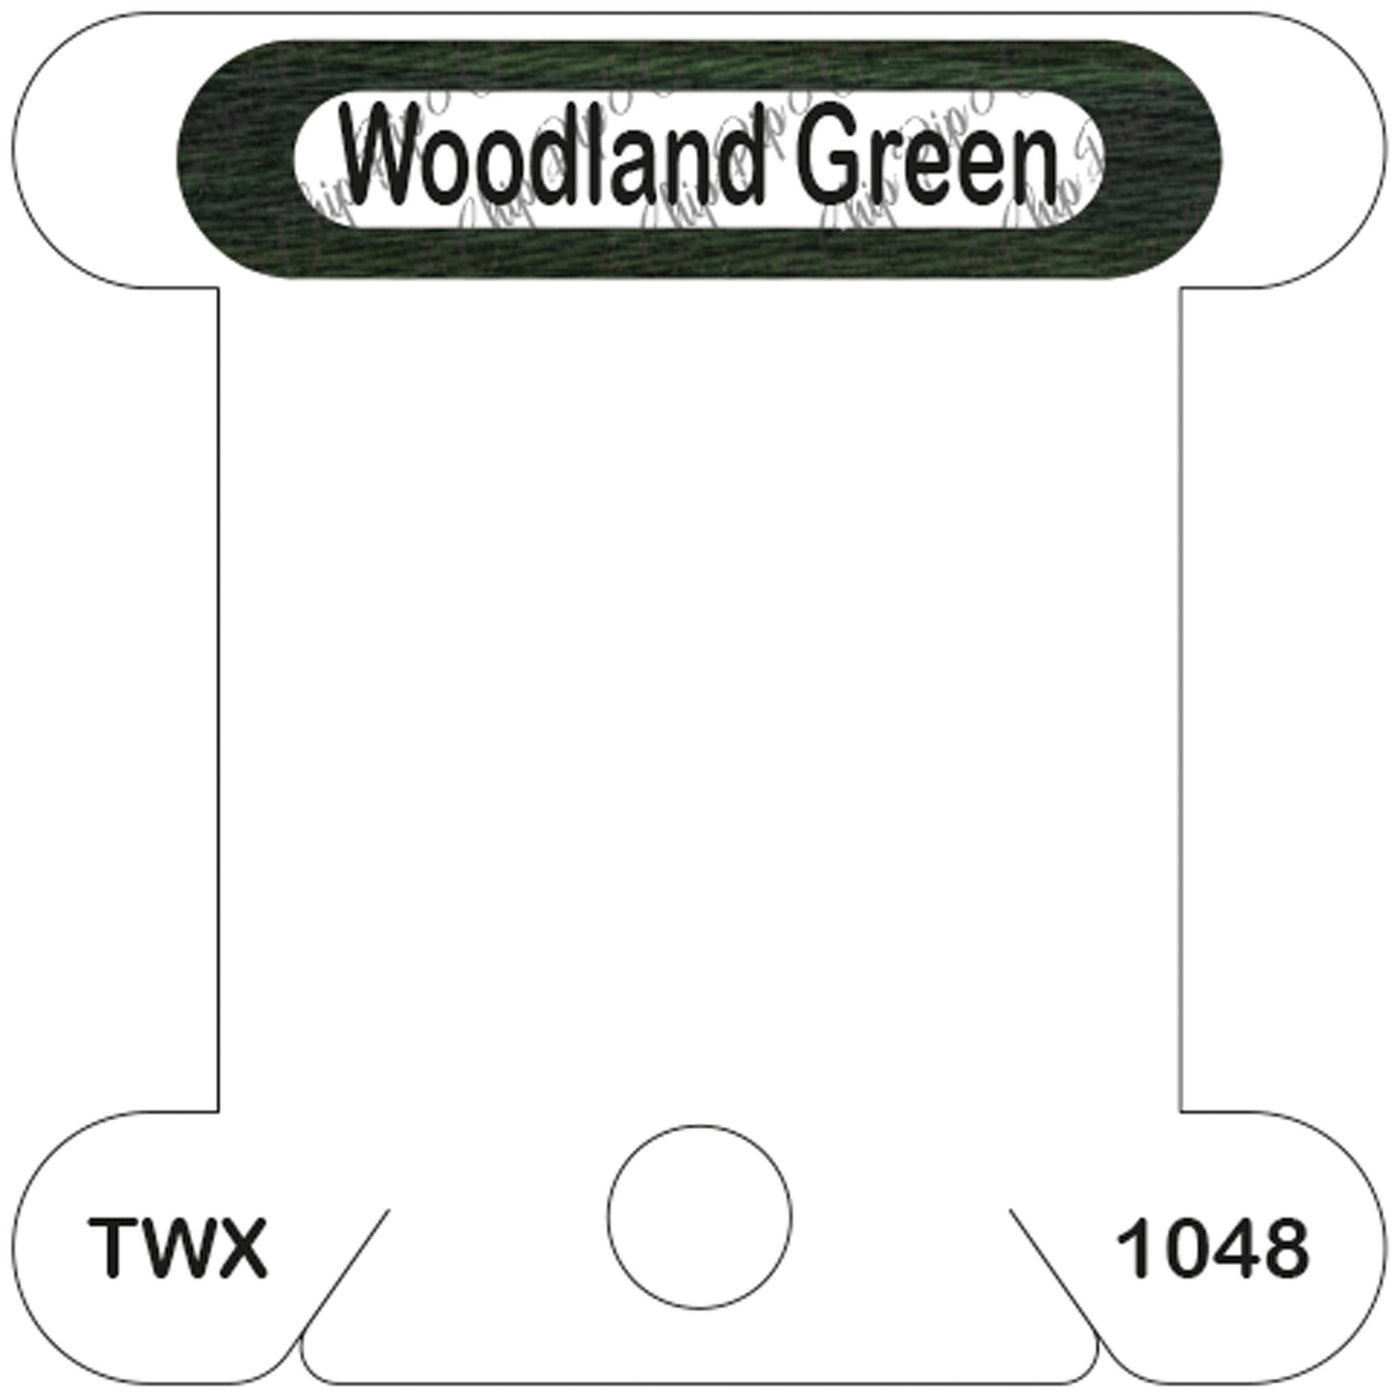 ThreadworX Woodland Green acrylic bobbin